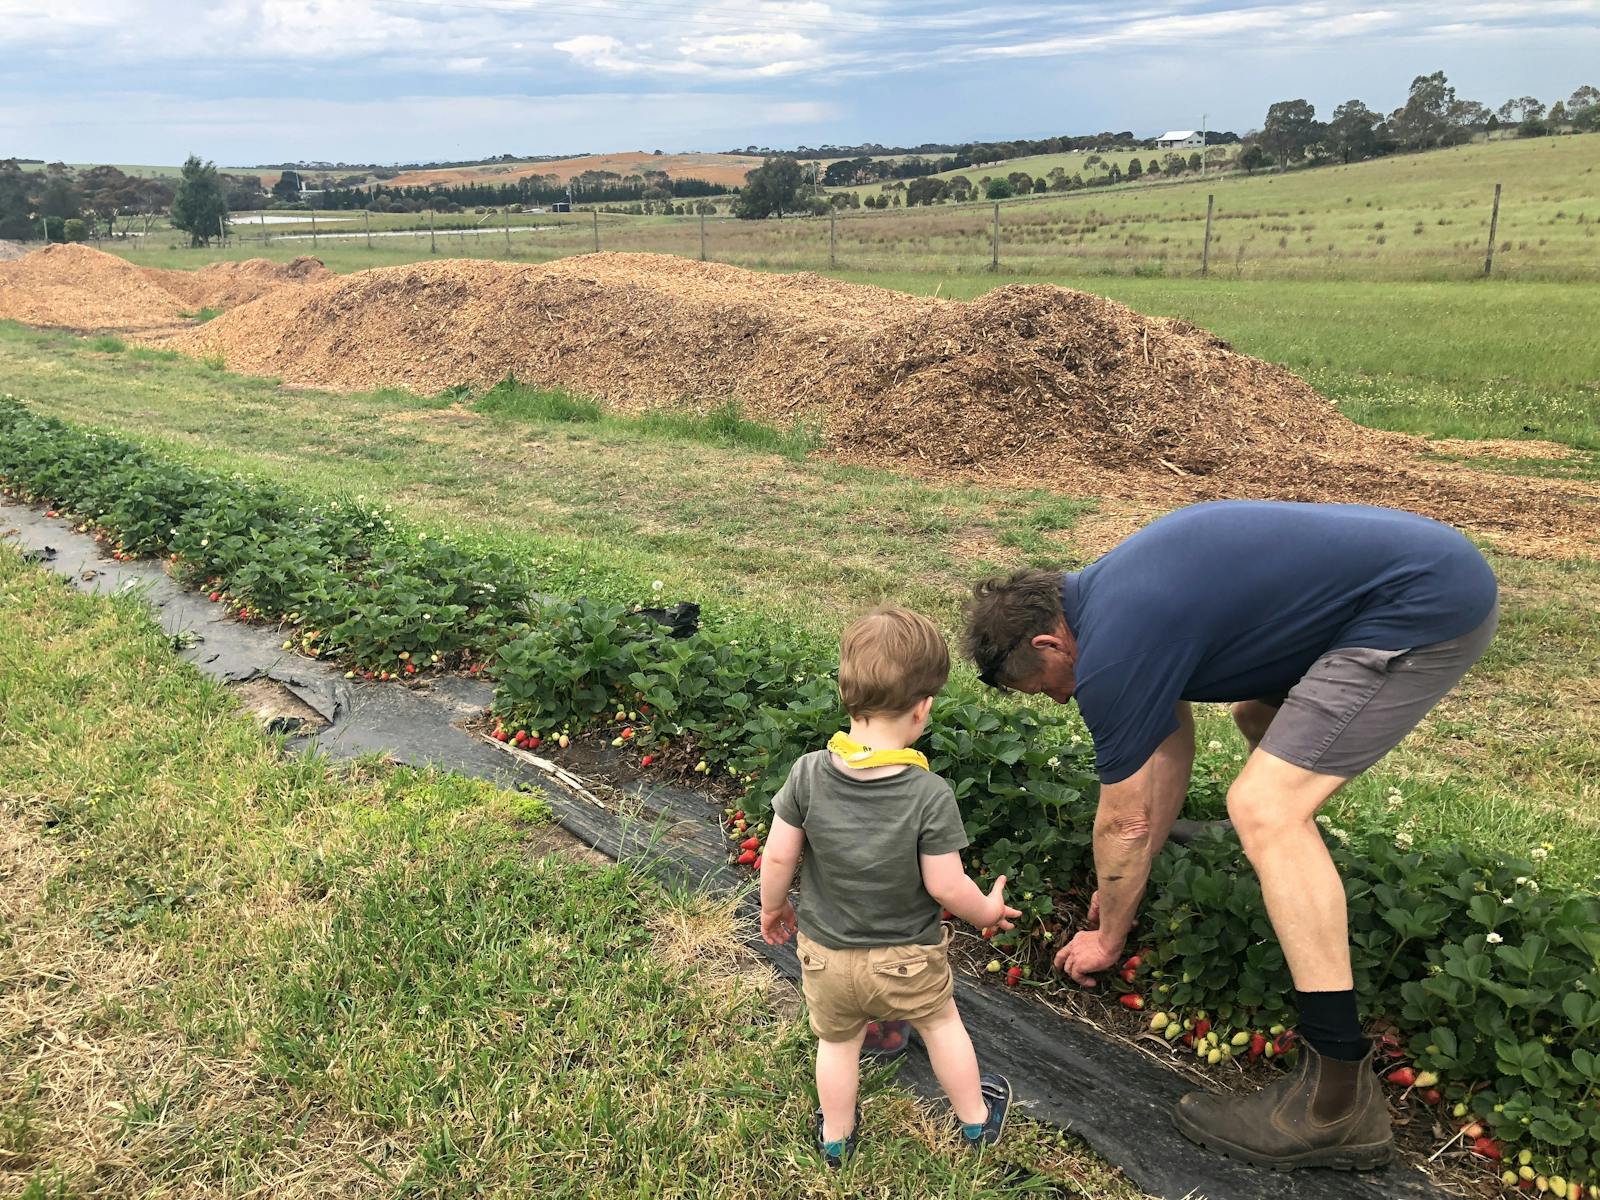 Family picking strawberries